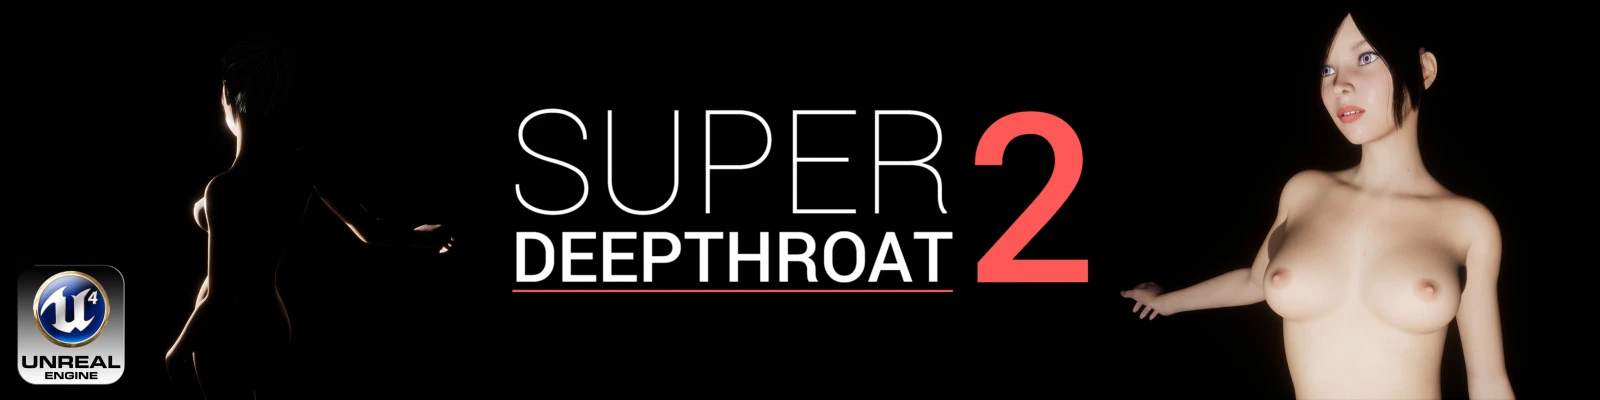 Super DeepThroat 2 [v0.1.0] main image